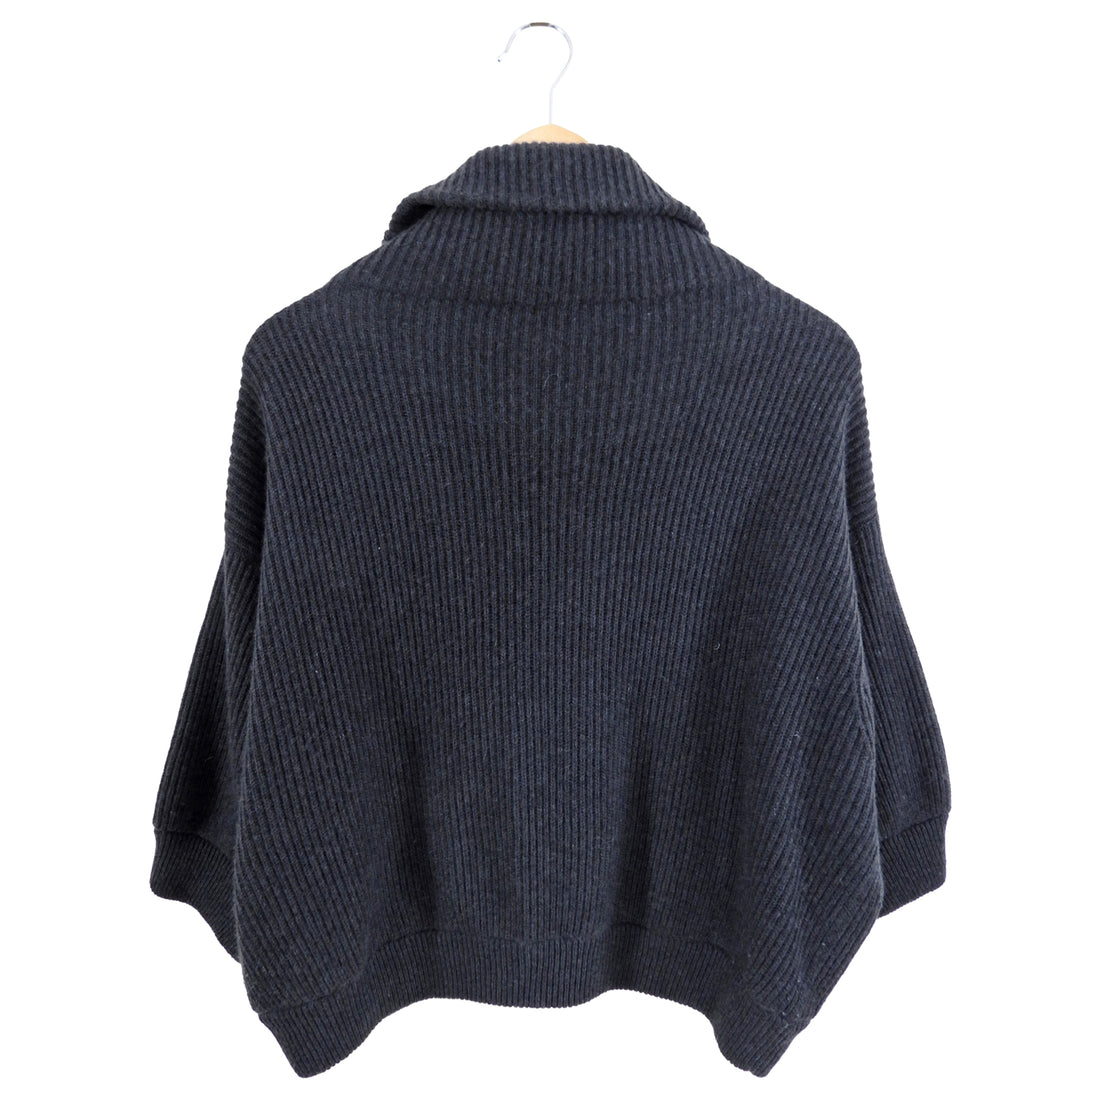 Brunello Cucinelli Grey Monili Cashmere Zip Cardigan Sweater - XS